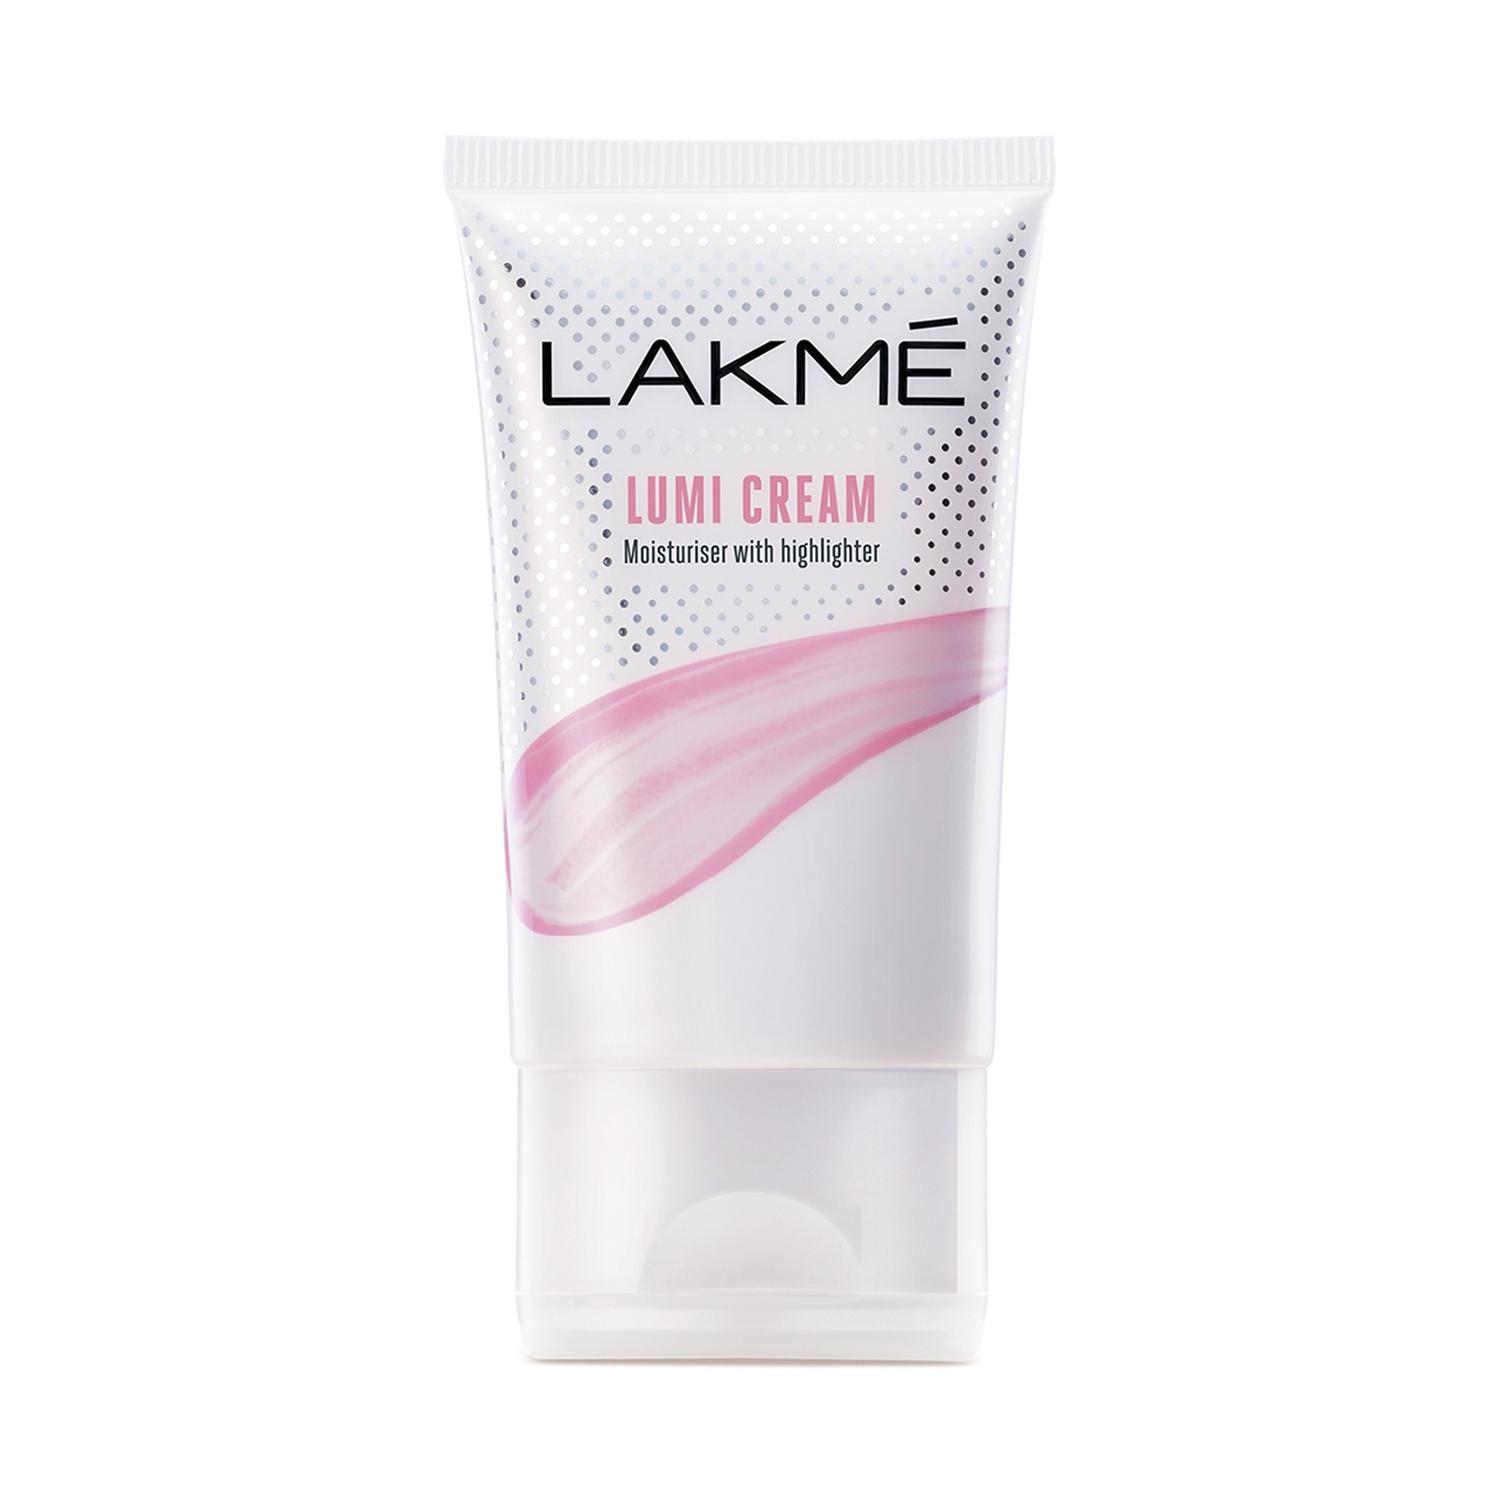 lakme lumi cream moisturiser with highlighter for a 3d glow (60g)